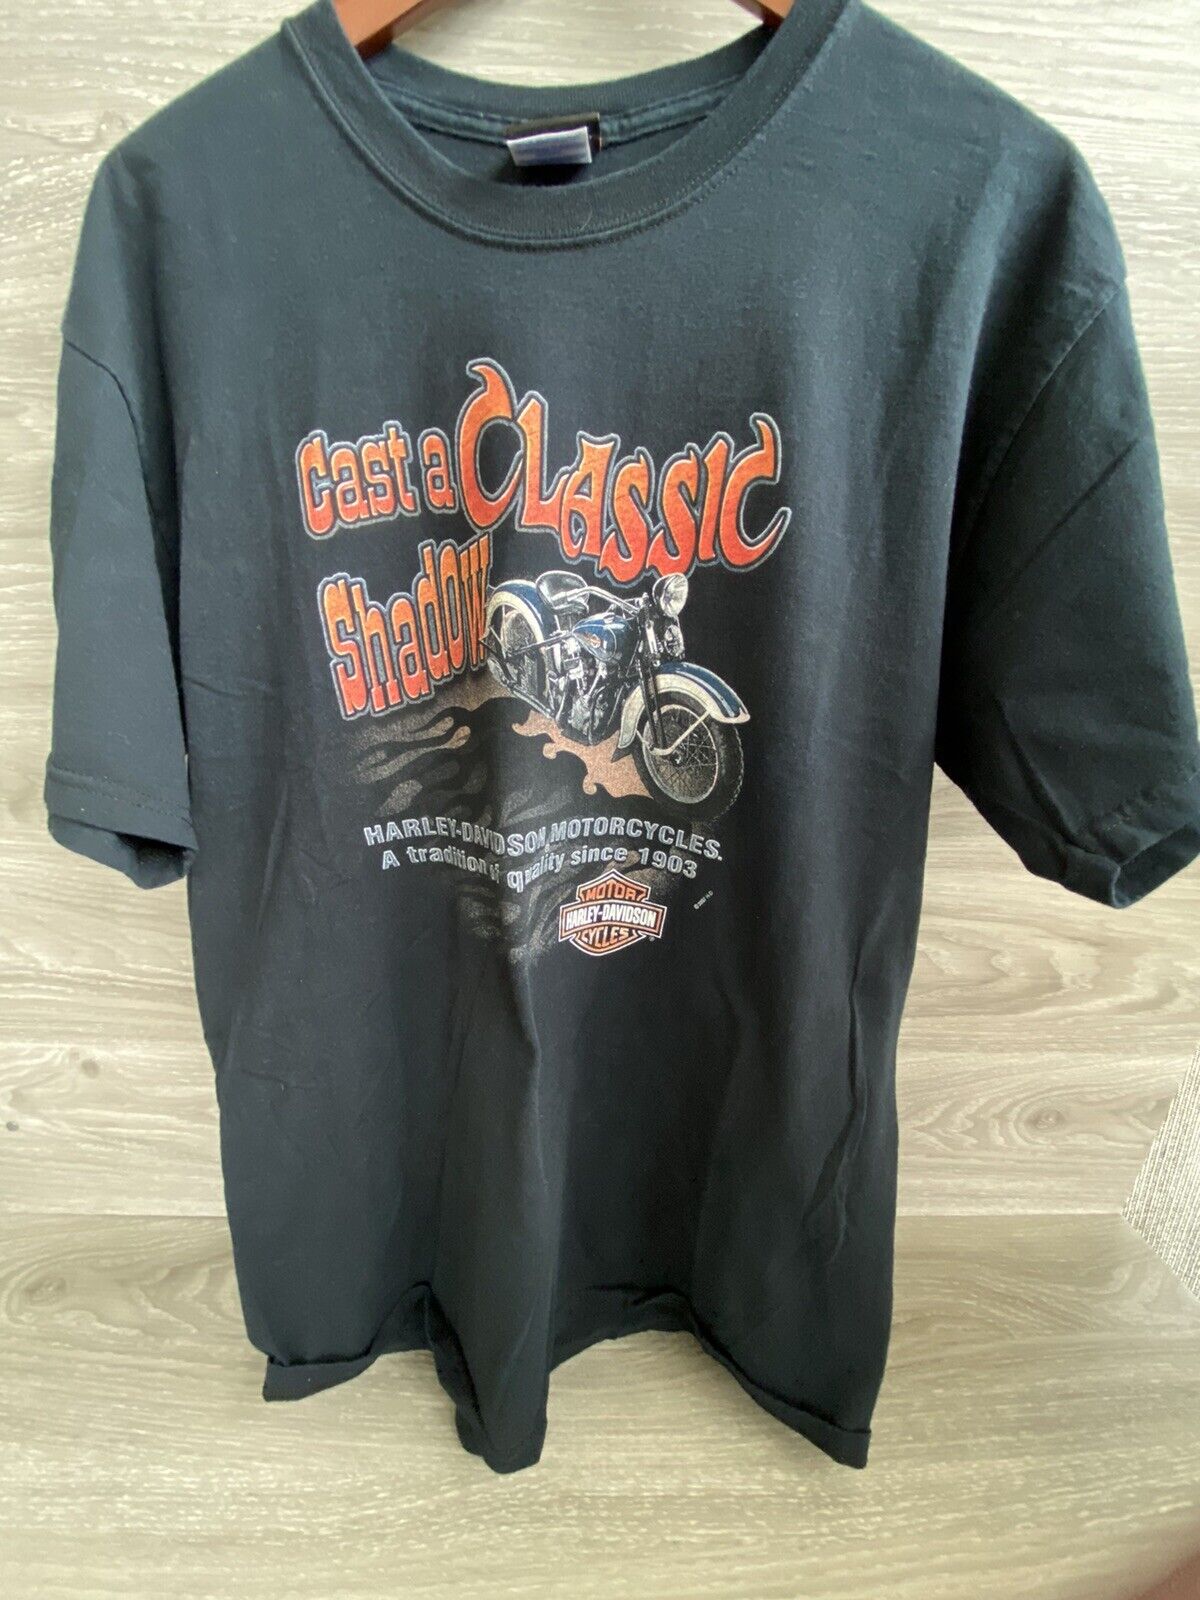 2007 Harley Davidson Alberta Canada Shirt Black Size Large